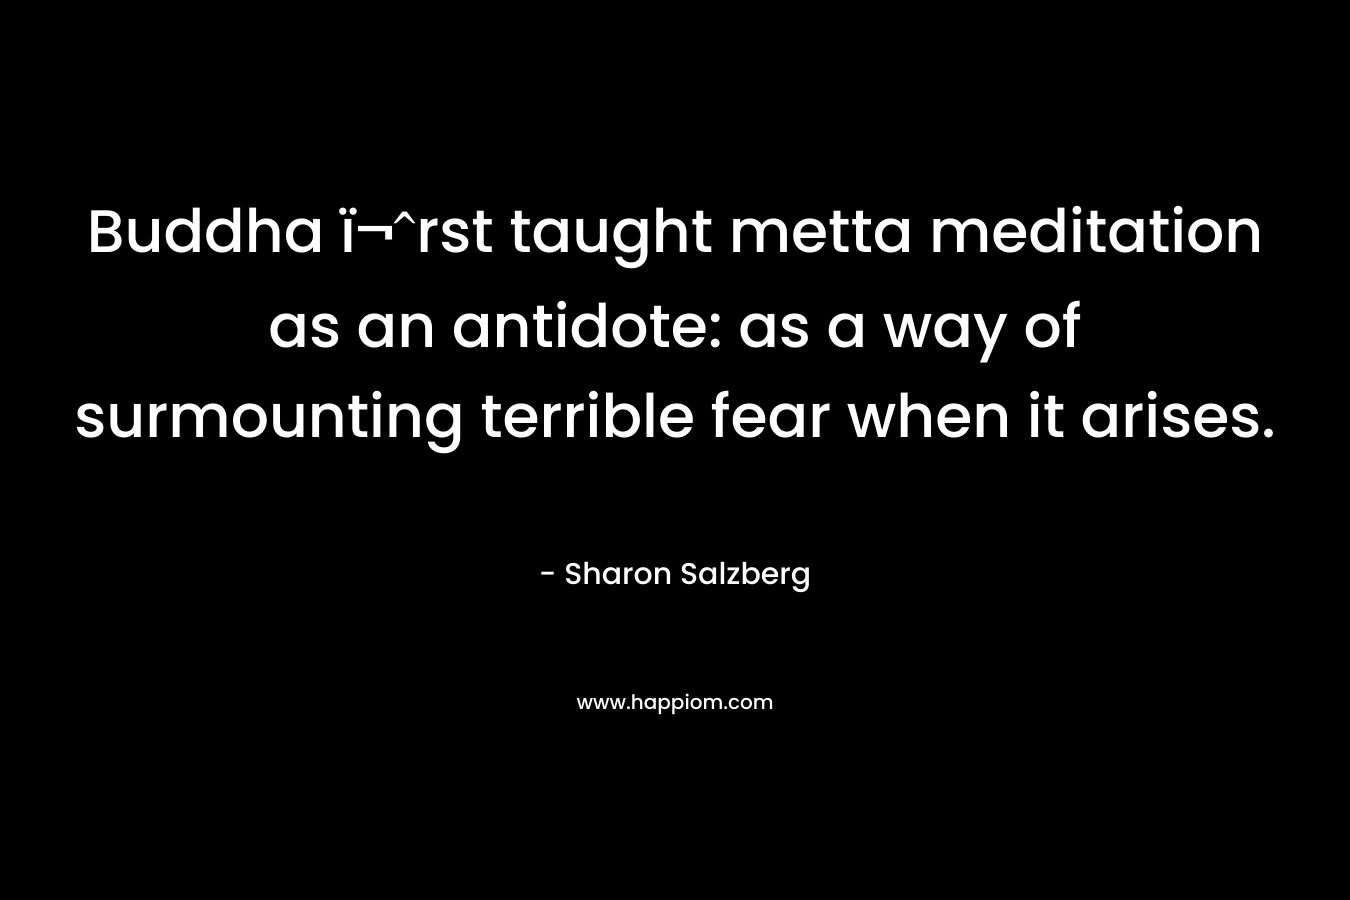 Buddha ï¬rst taught metta meditation as an antidote: as a way of surmounting terrible fear when it arises.